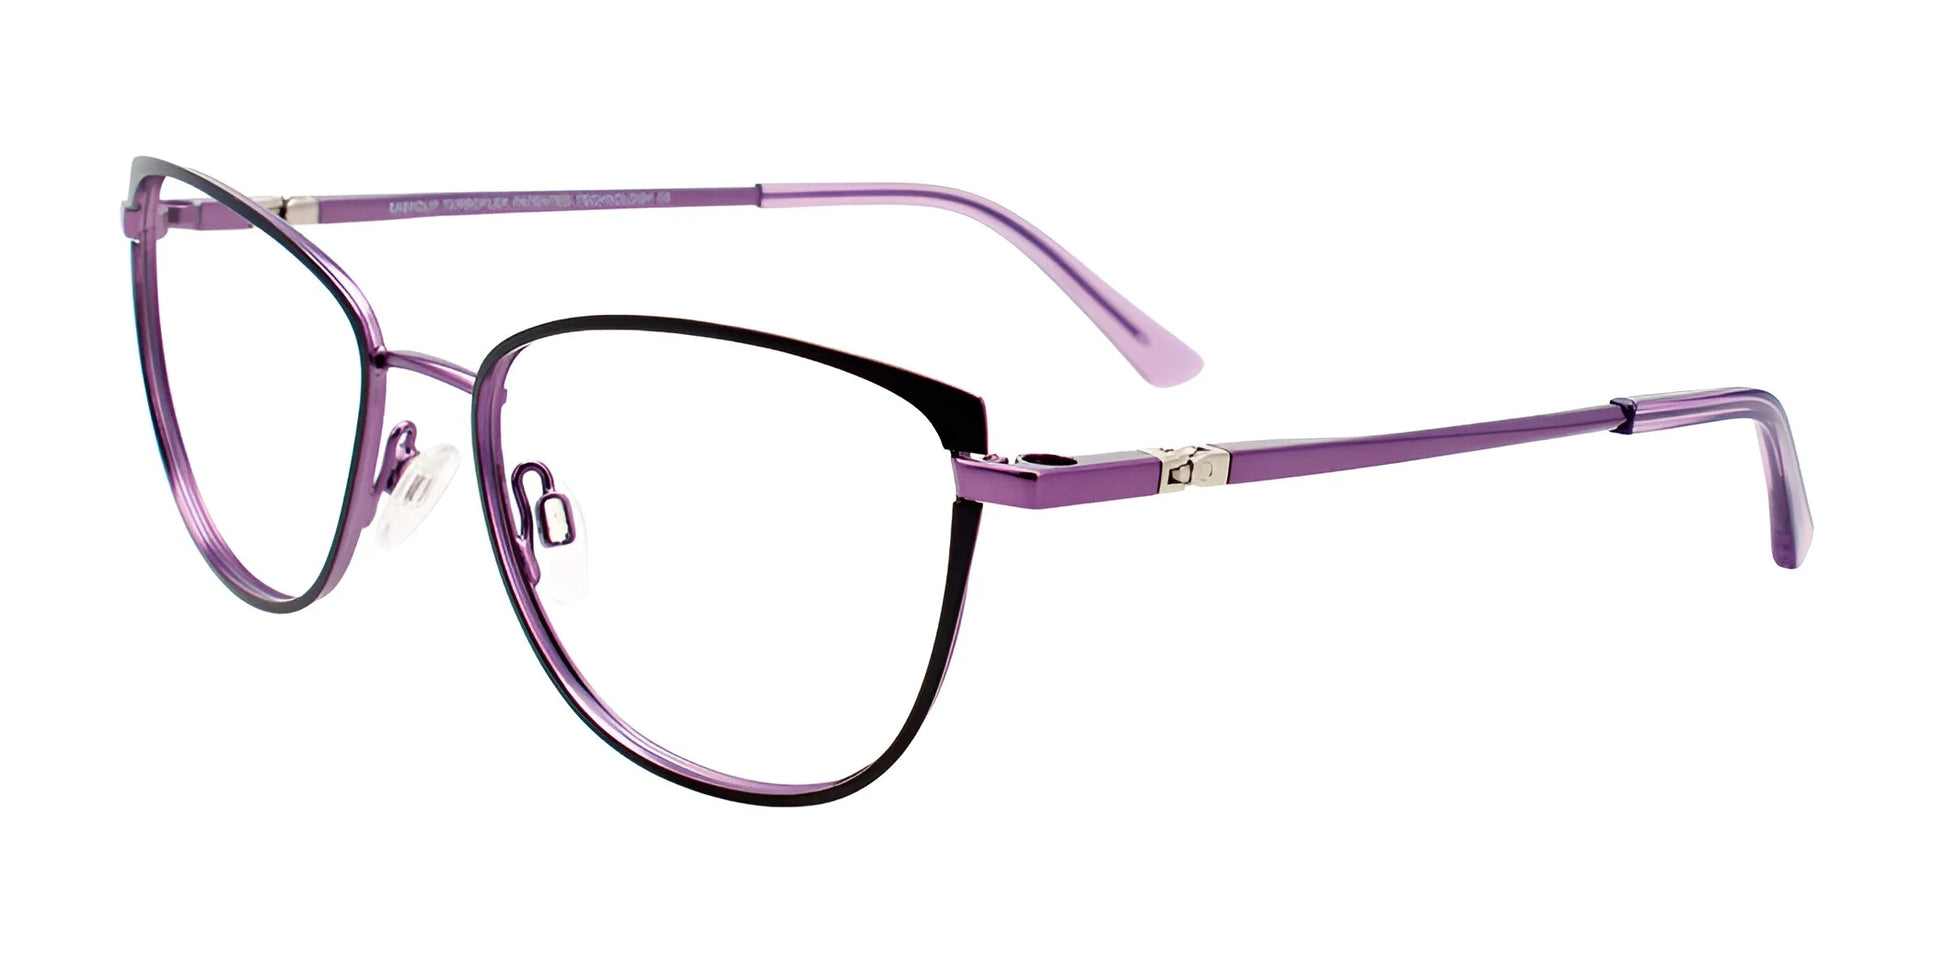 EasyClip EC624 Eyeglasses Black & Light Purple